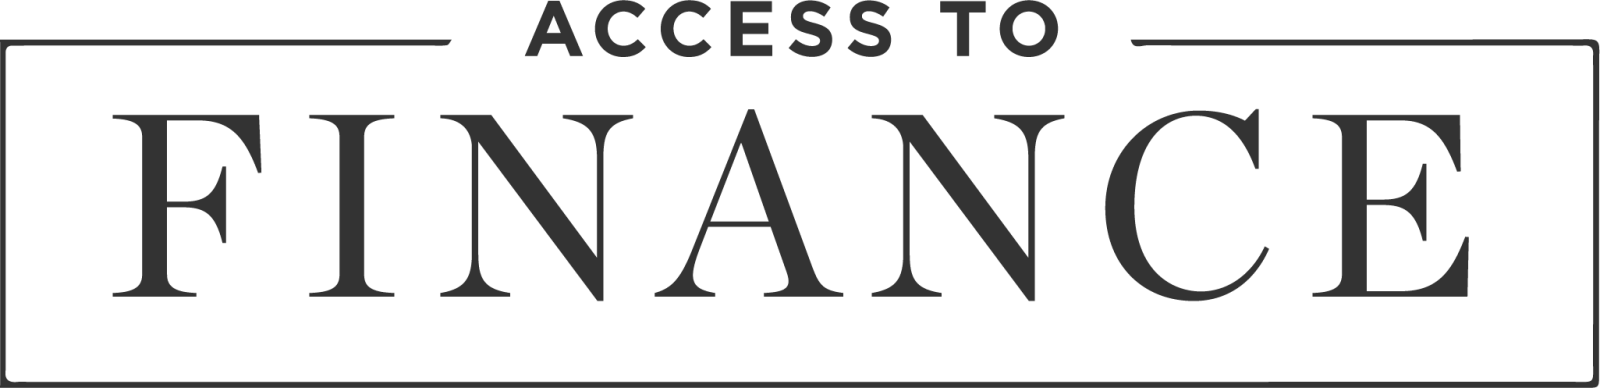 Access to Finance Logos Grey